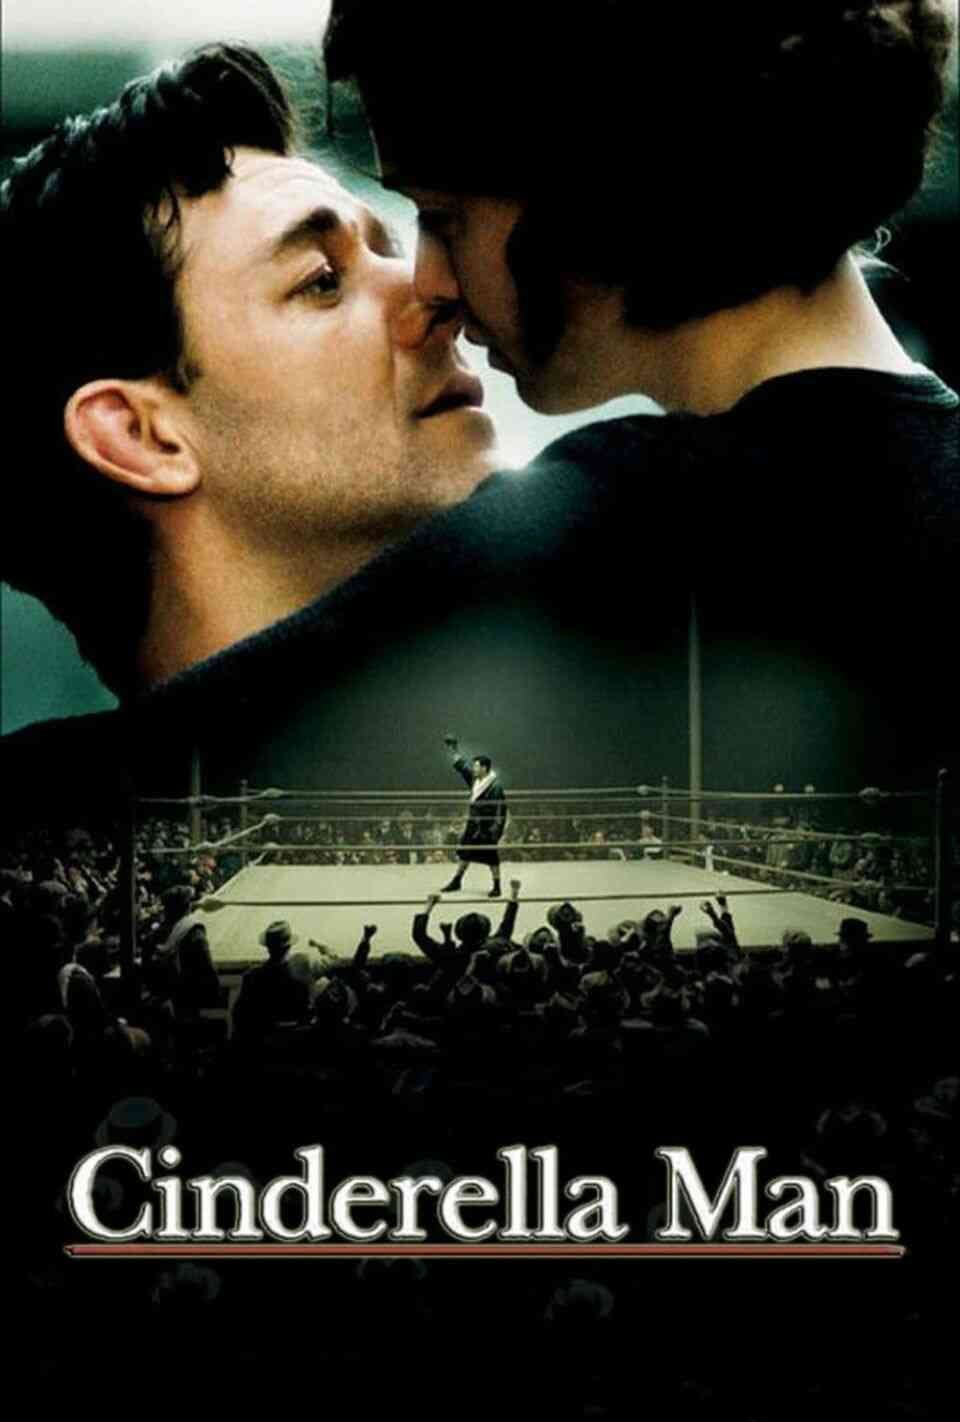 Read Cinderella Man screenplay (poster)